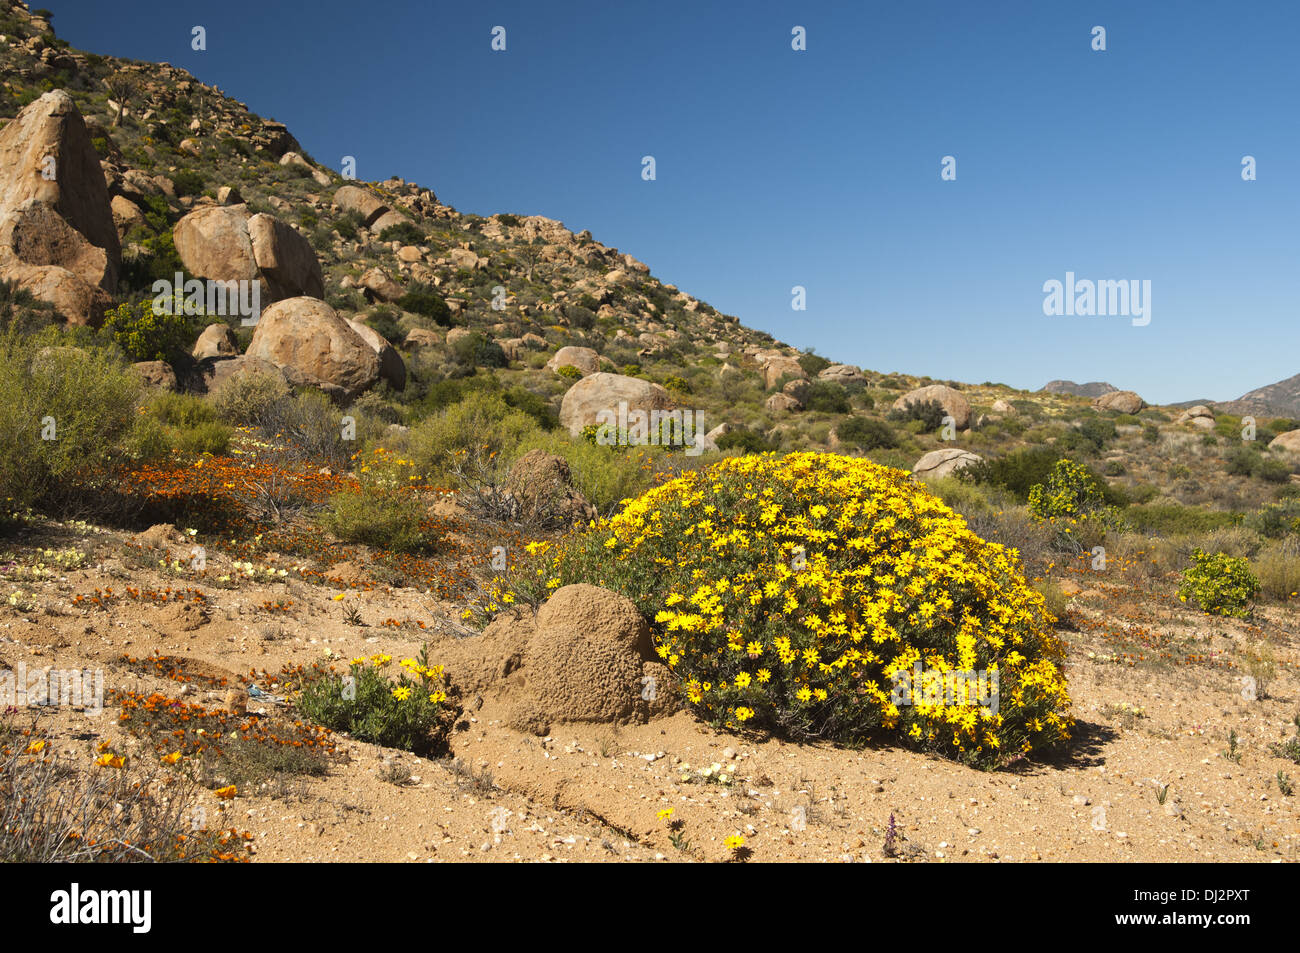 Yellow-flowering shrub of Skaapbos Stock Photo